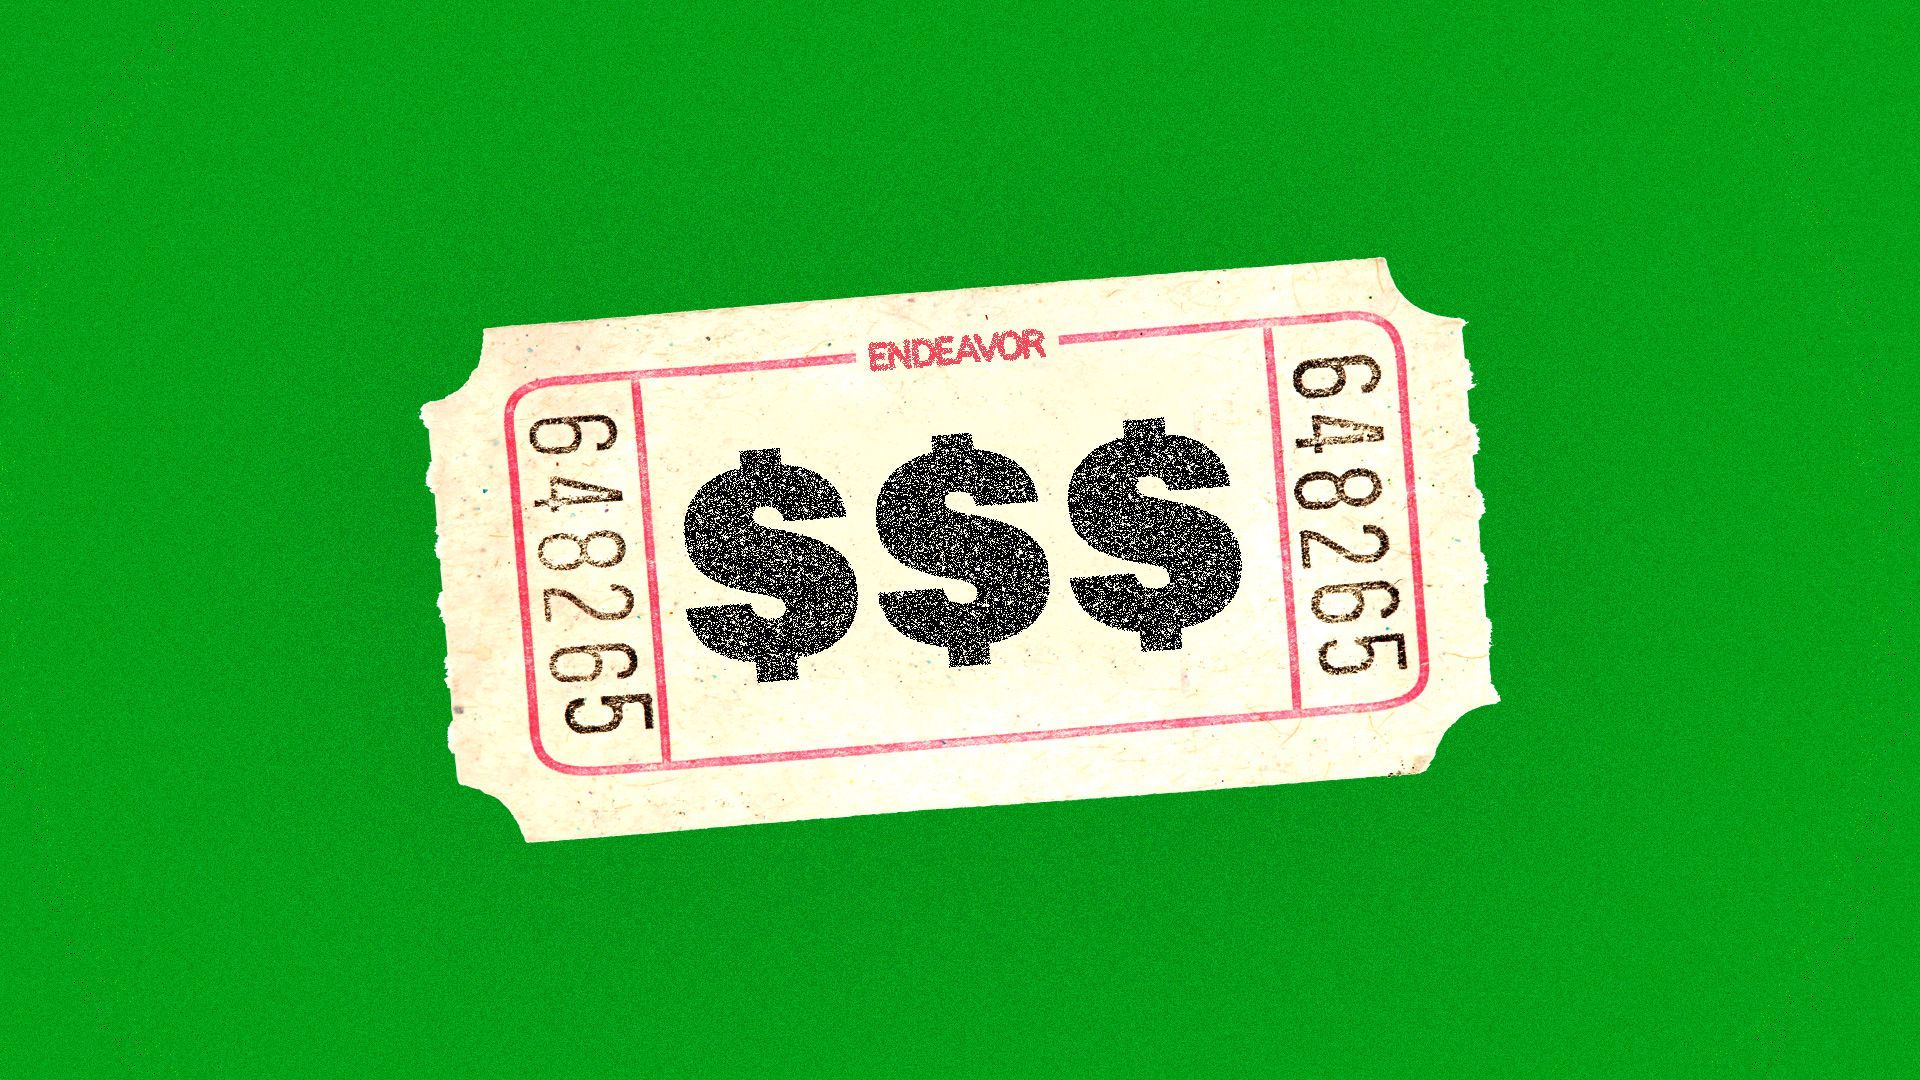 Illustration of a ticket stub with cash symbols printed on it